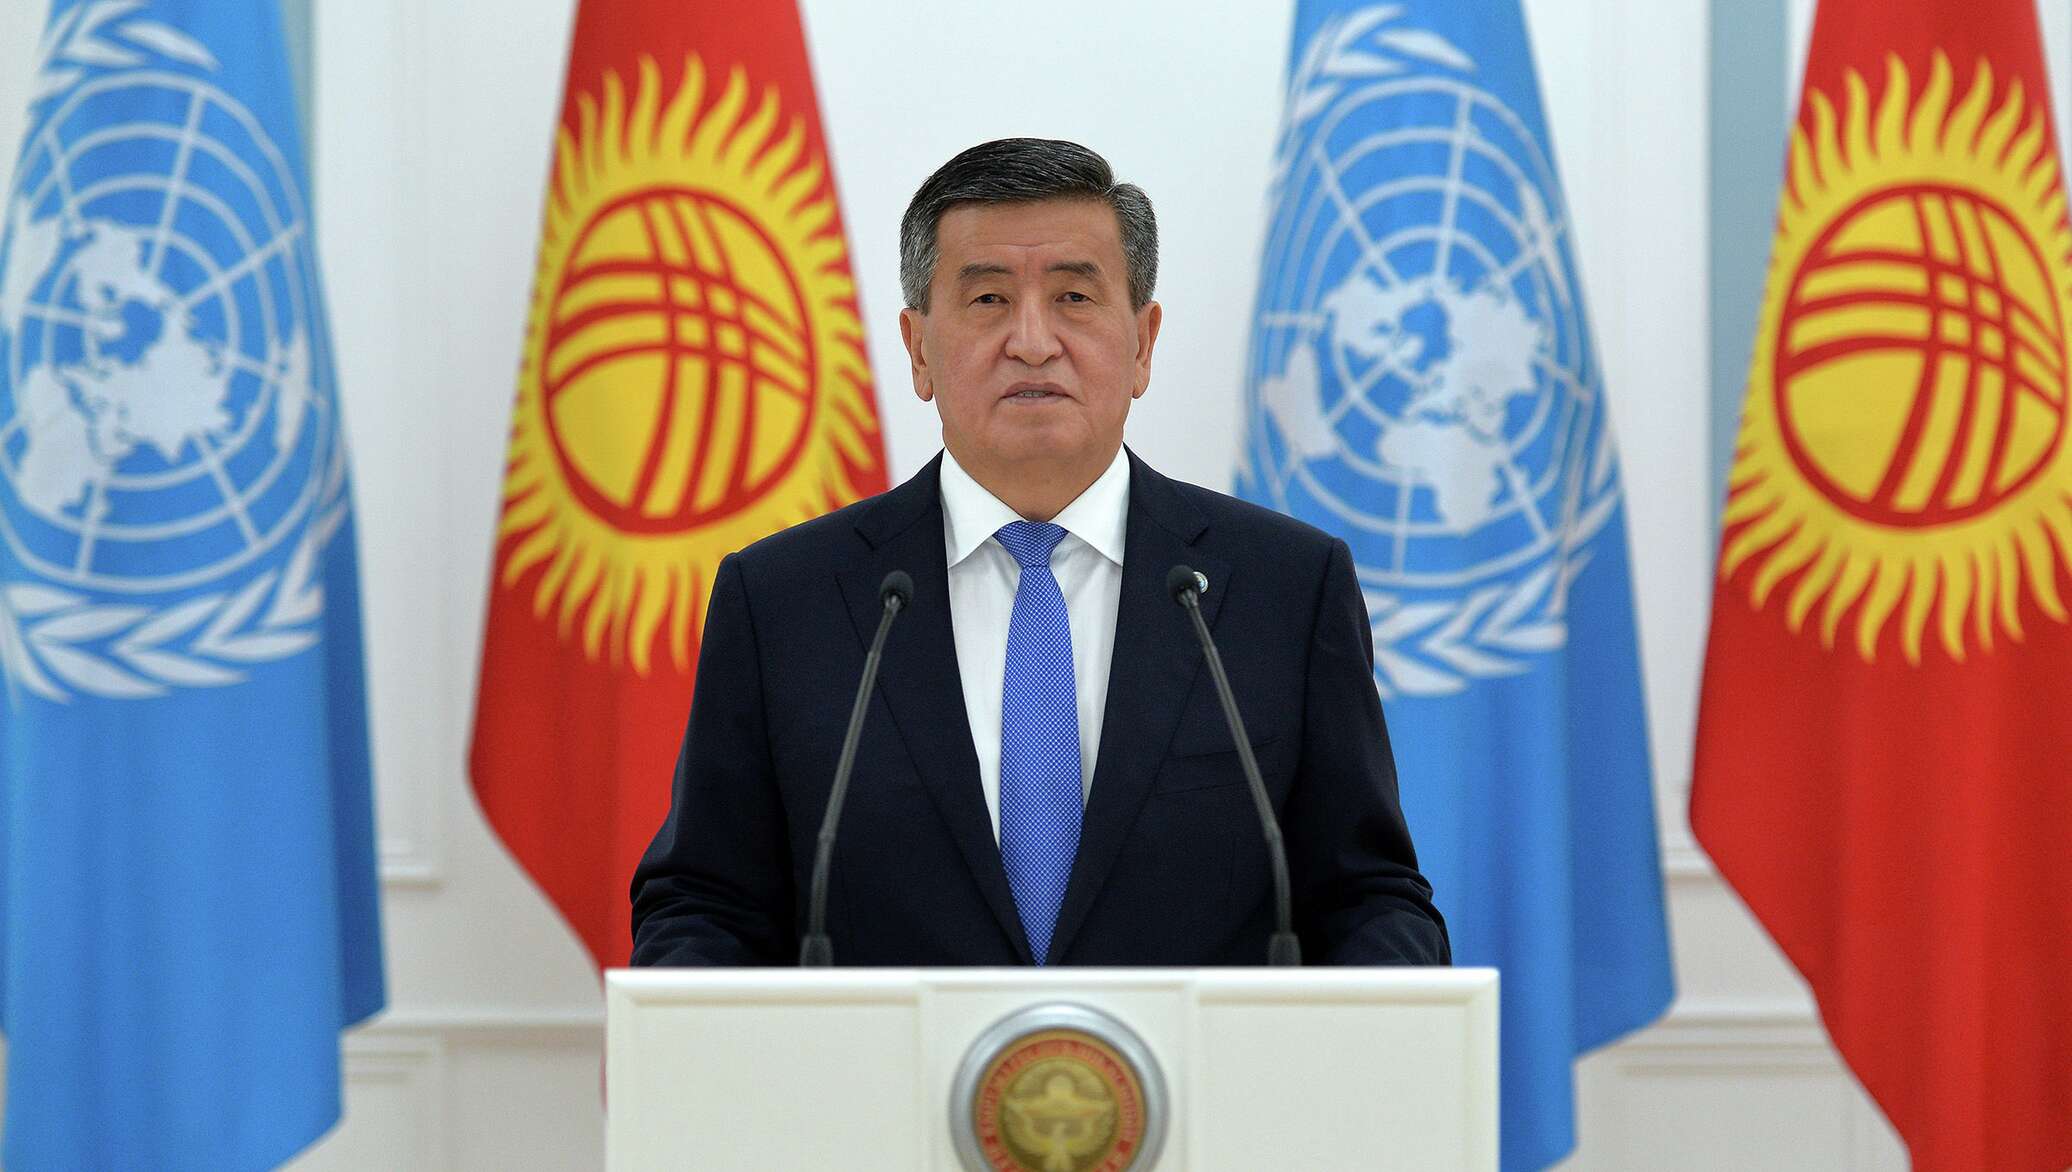 Оон 2020. Киргизия ООН. Кыргызстан внешняя политика ООН. РКИК ООН Кыргызстан.